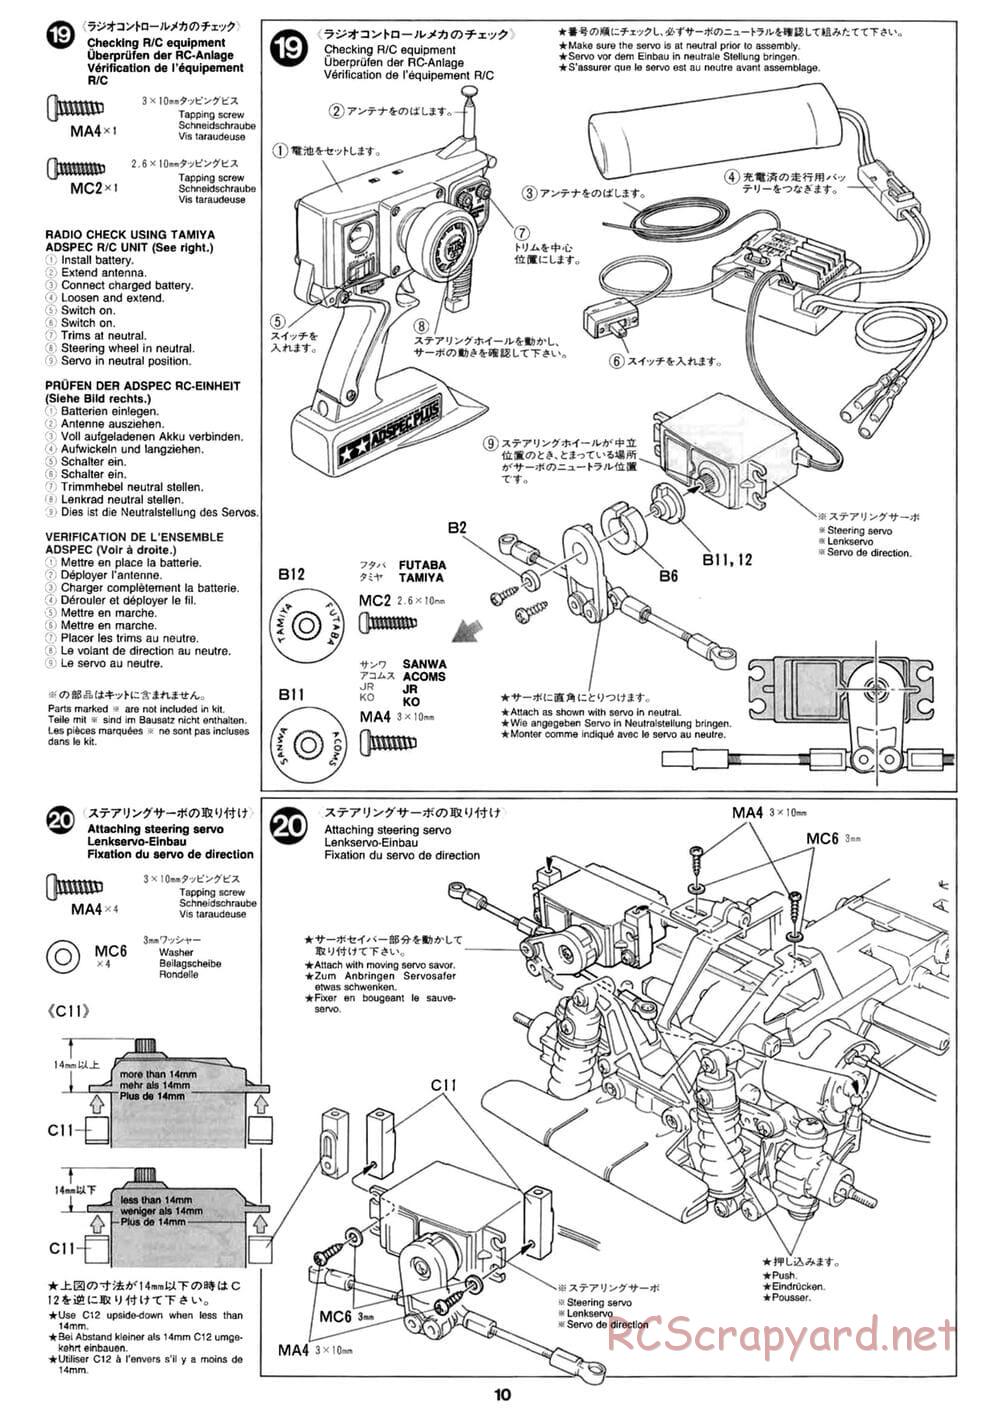 Tamiya - Peugeot 306 Maxi WRC - FF-02 Chassis - Manual - Page 10